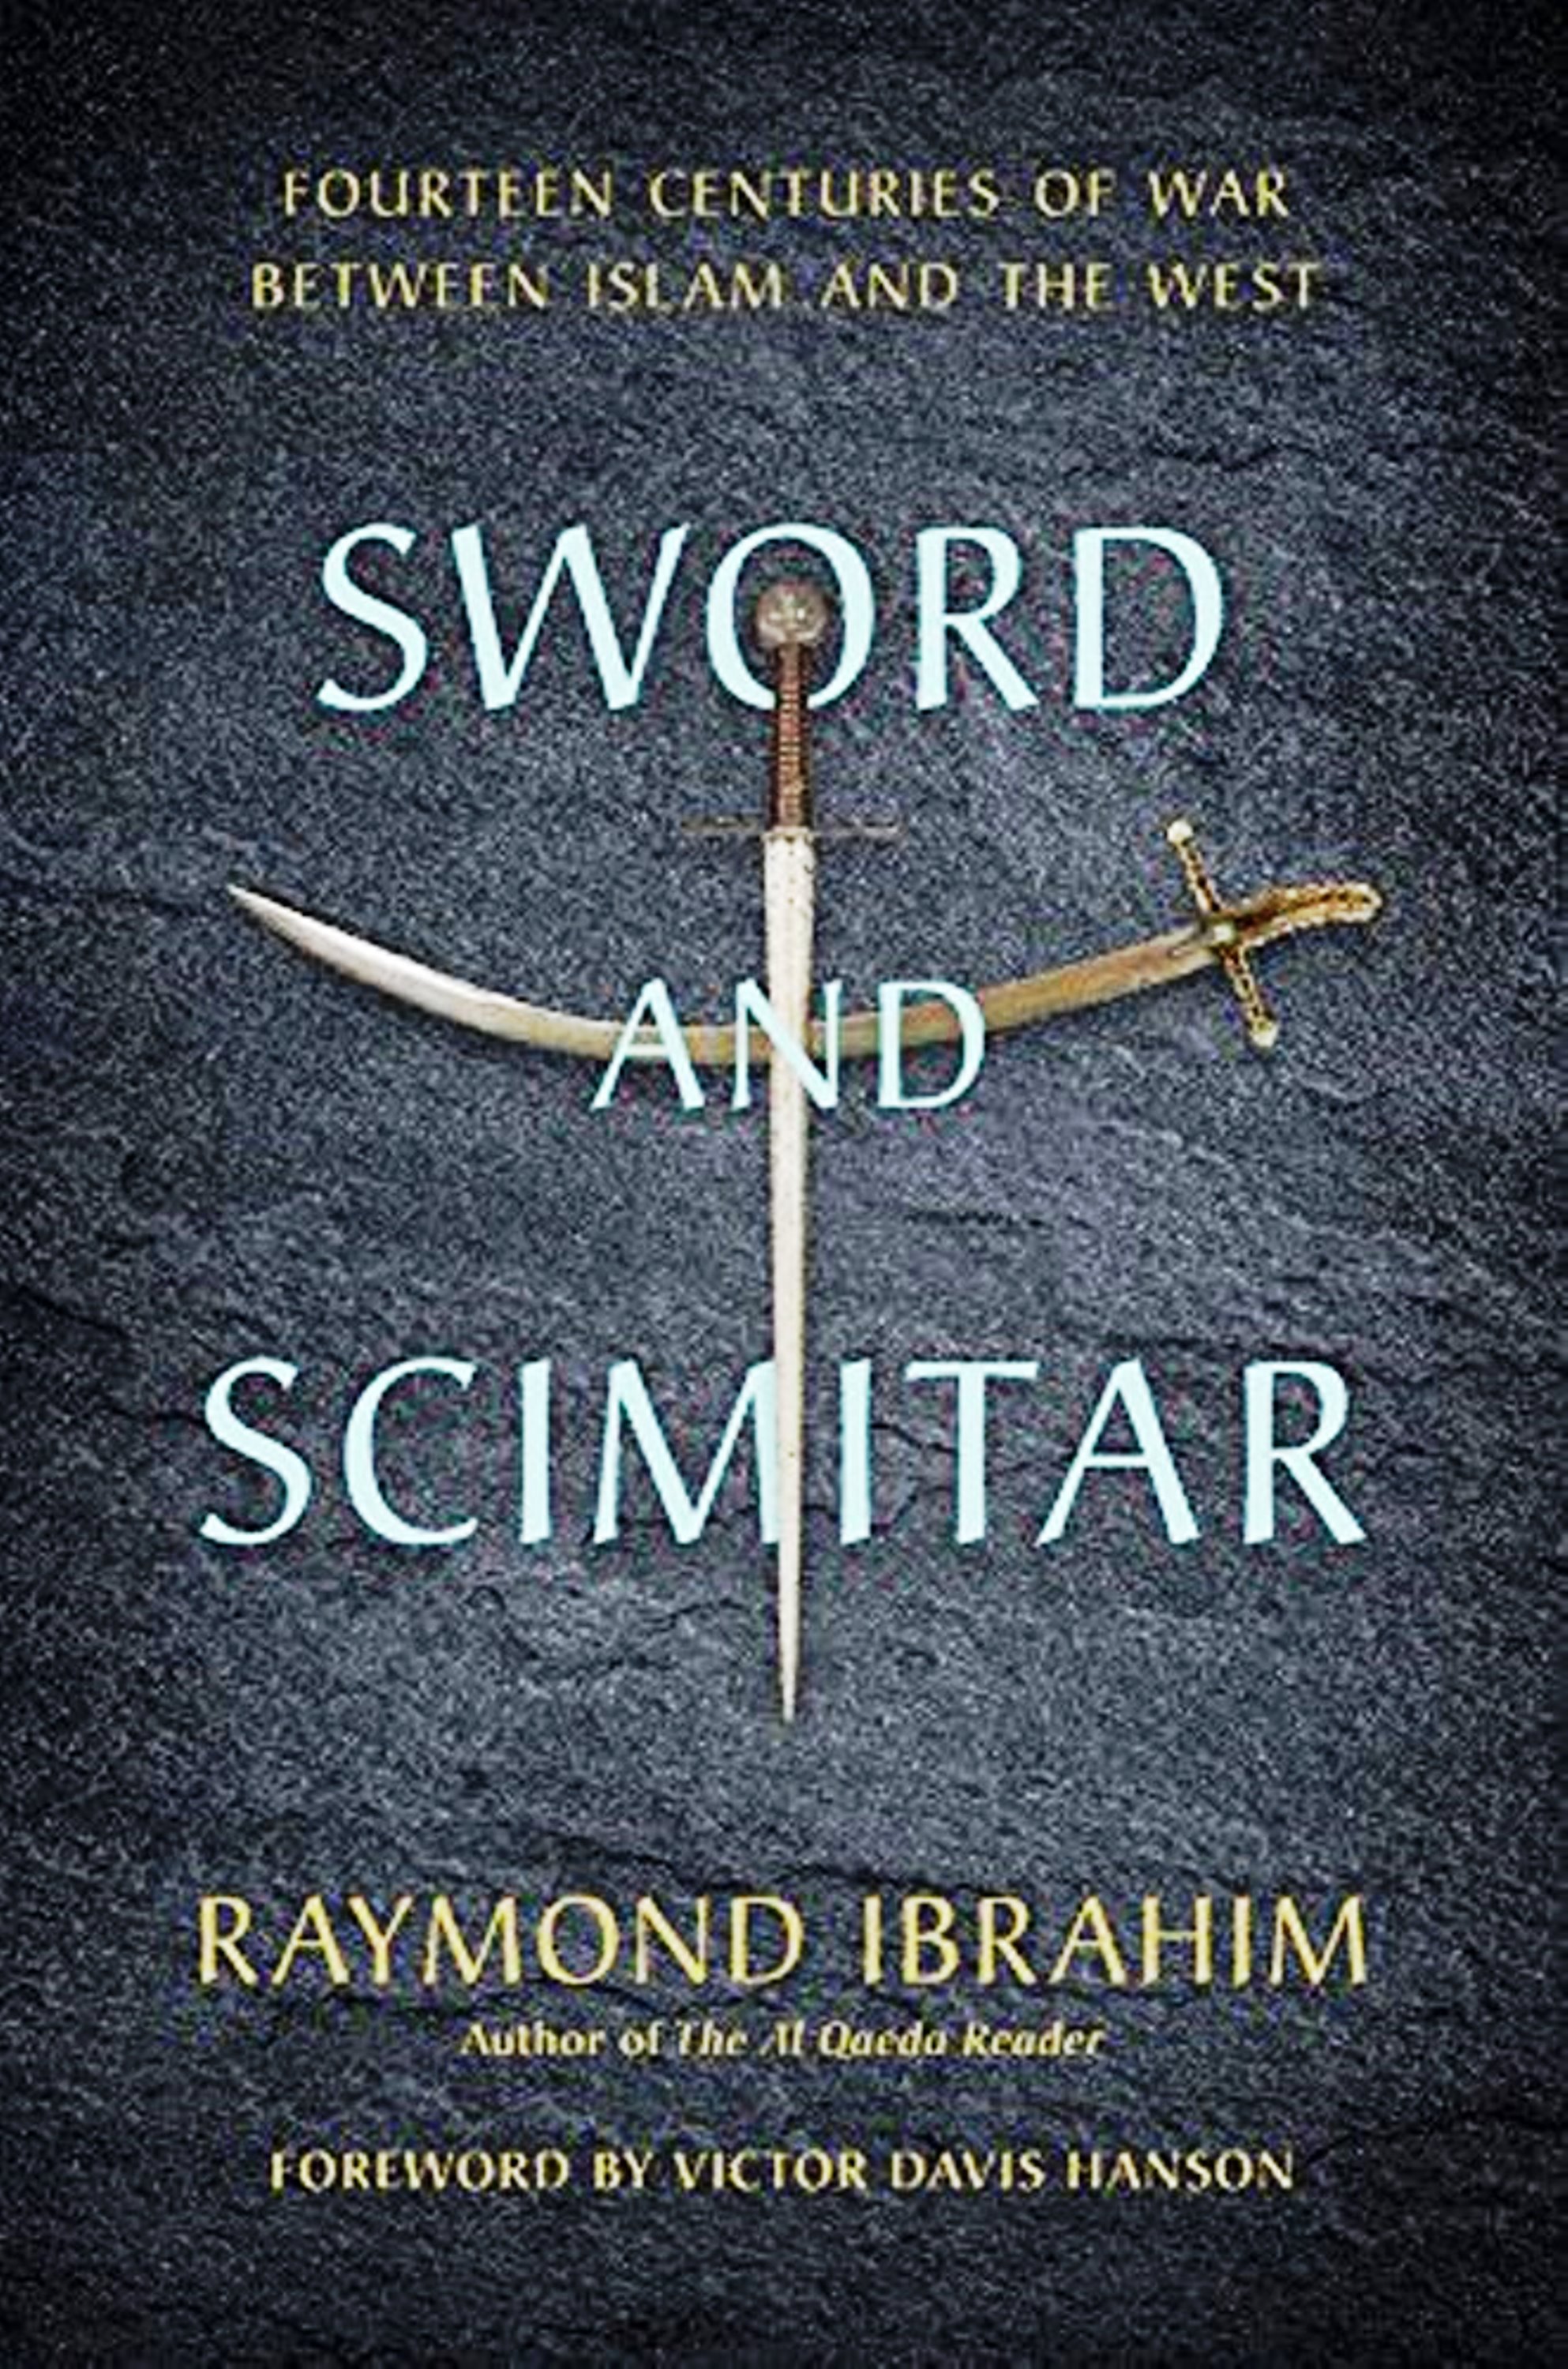 Sword and Scimitar: A Look into Raymond Ibrahim’s New Book